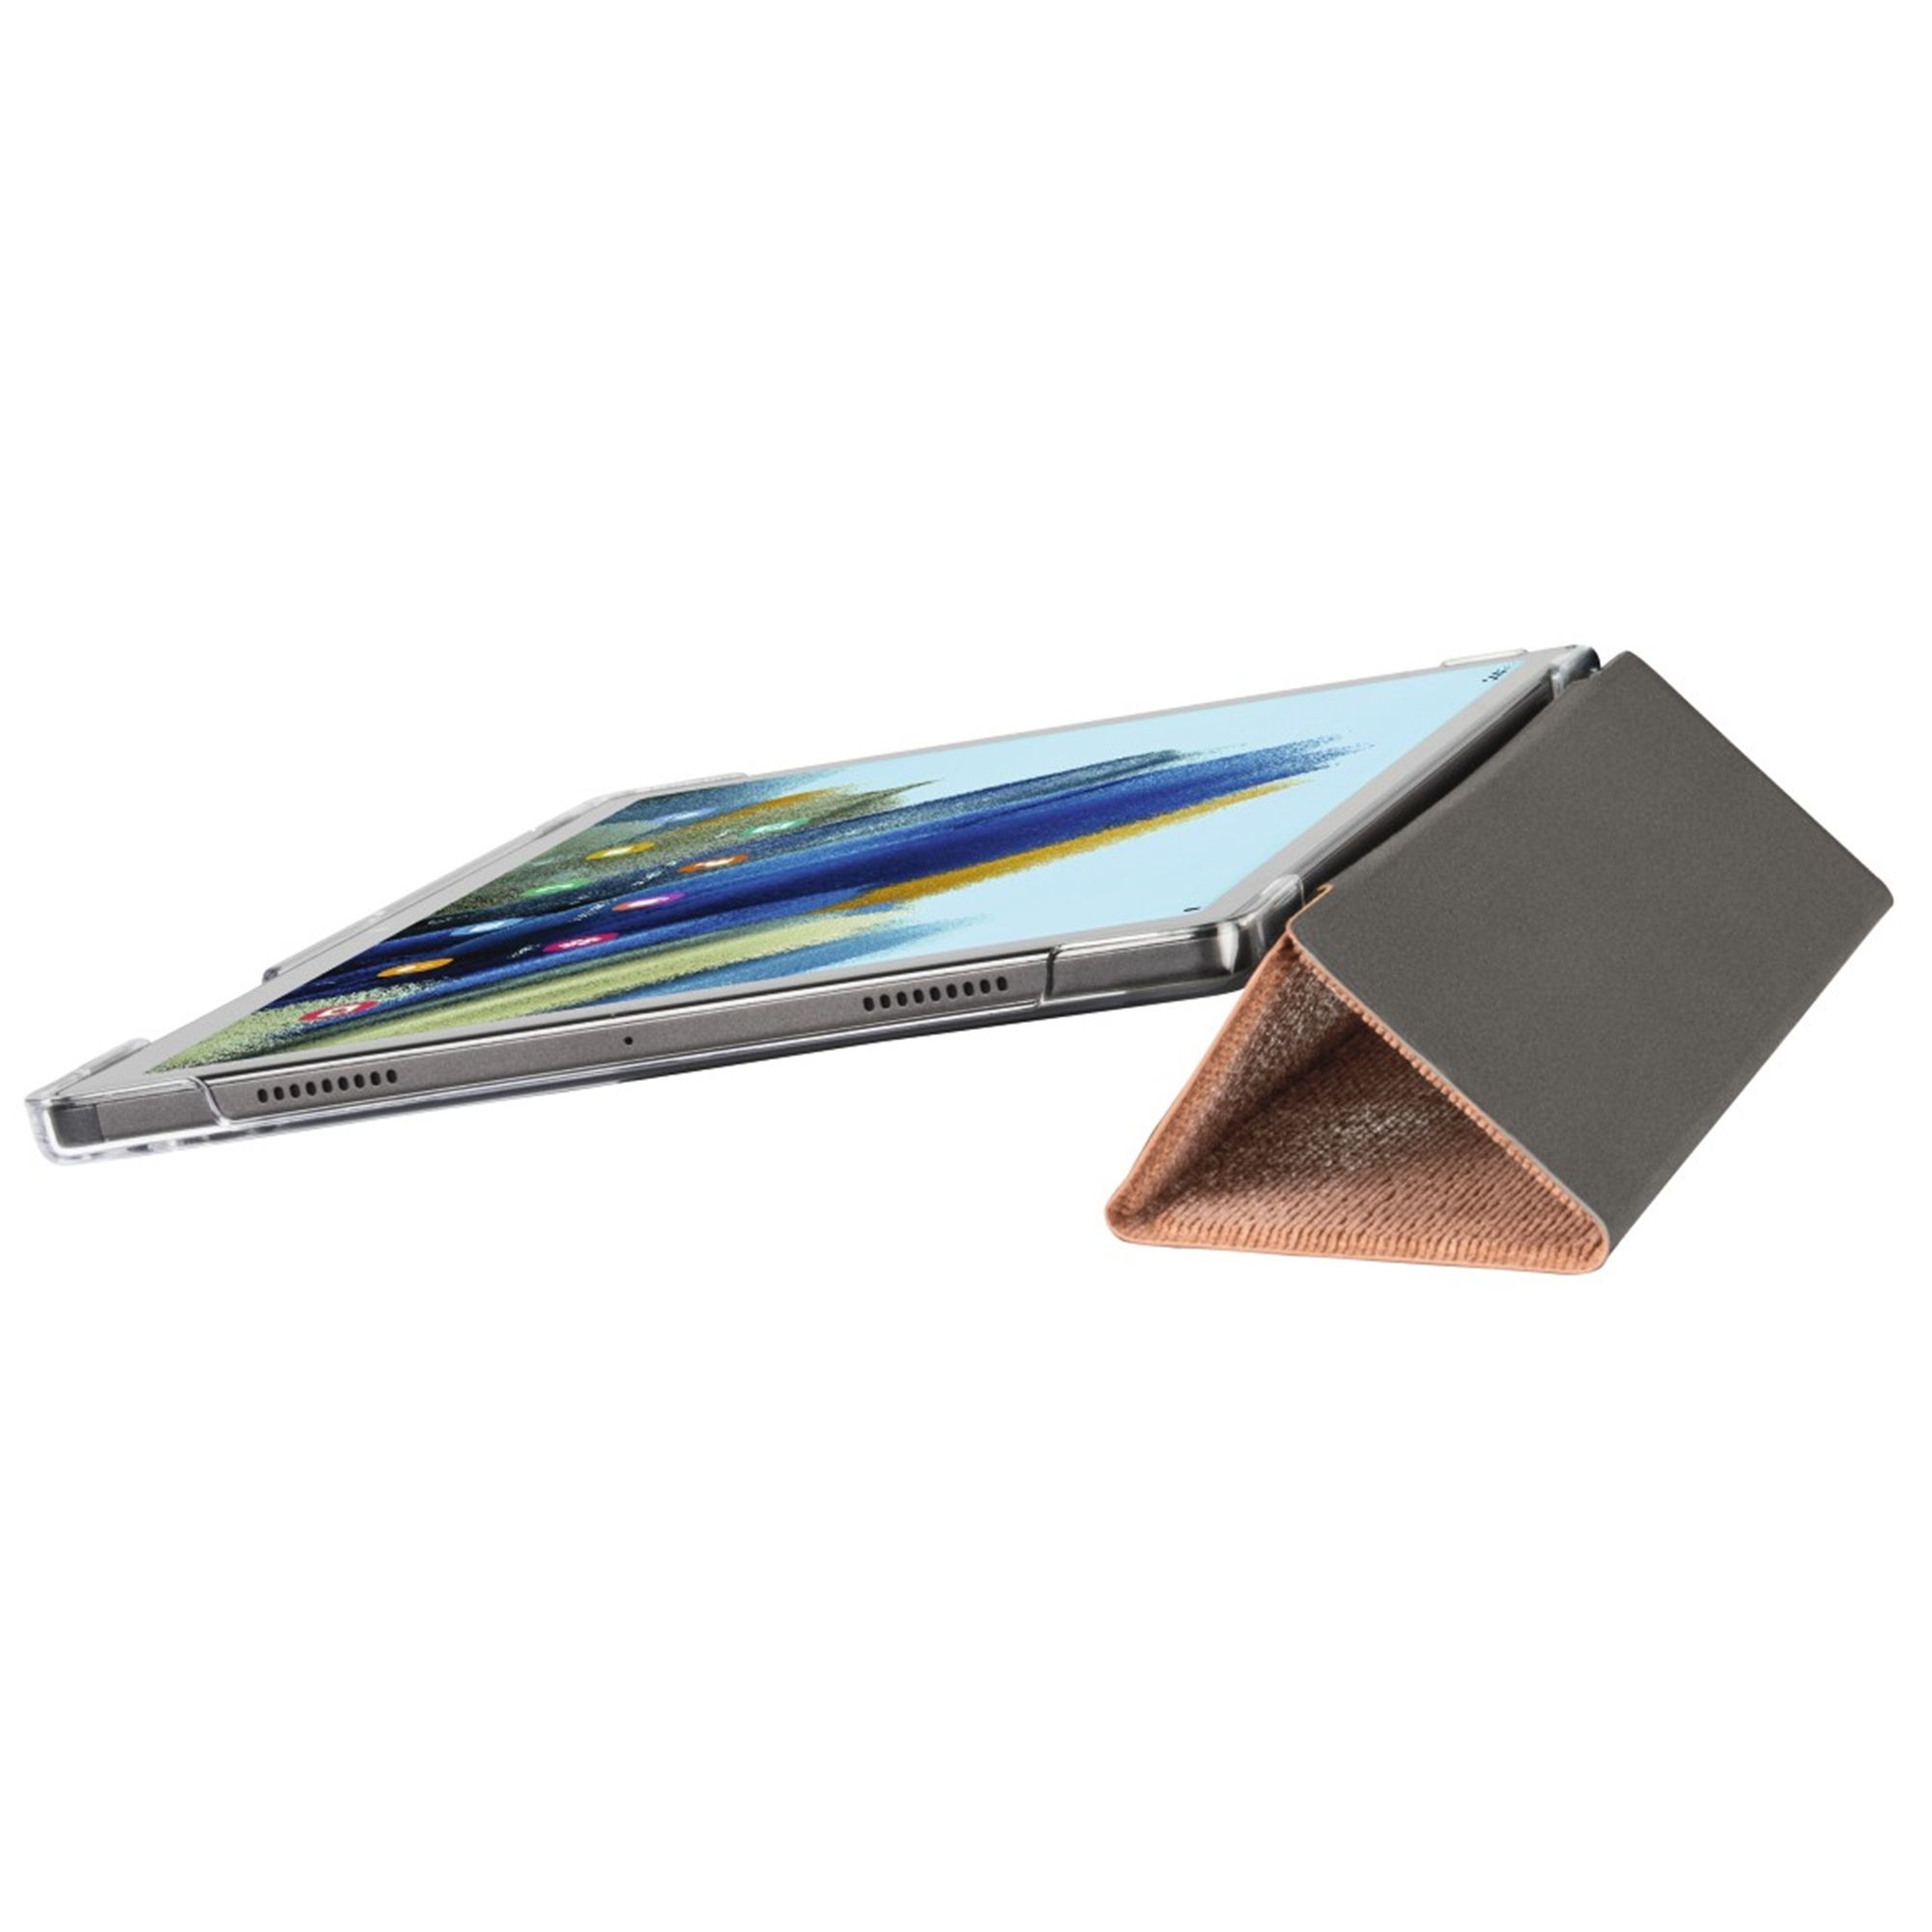 Samsung Cover Tablet-Case für Polyester, Flip Cali HAMA Pfirsich